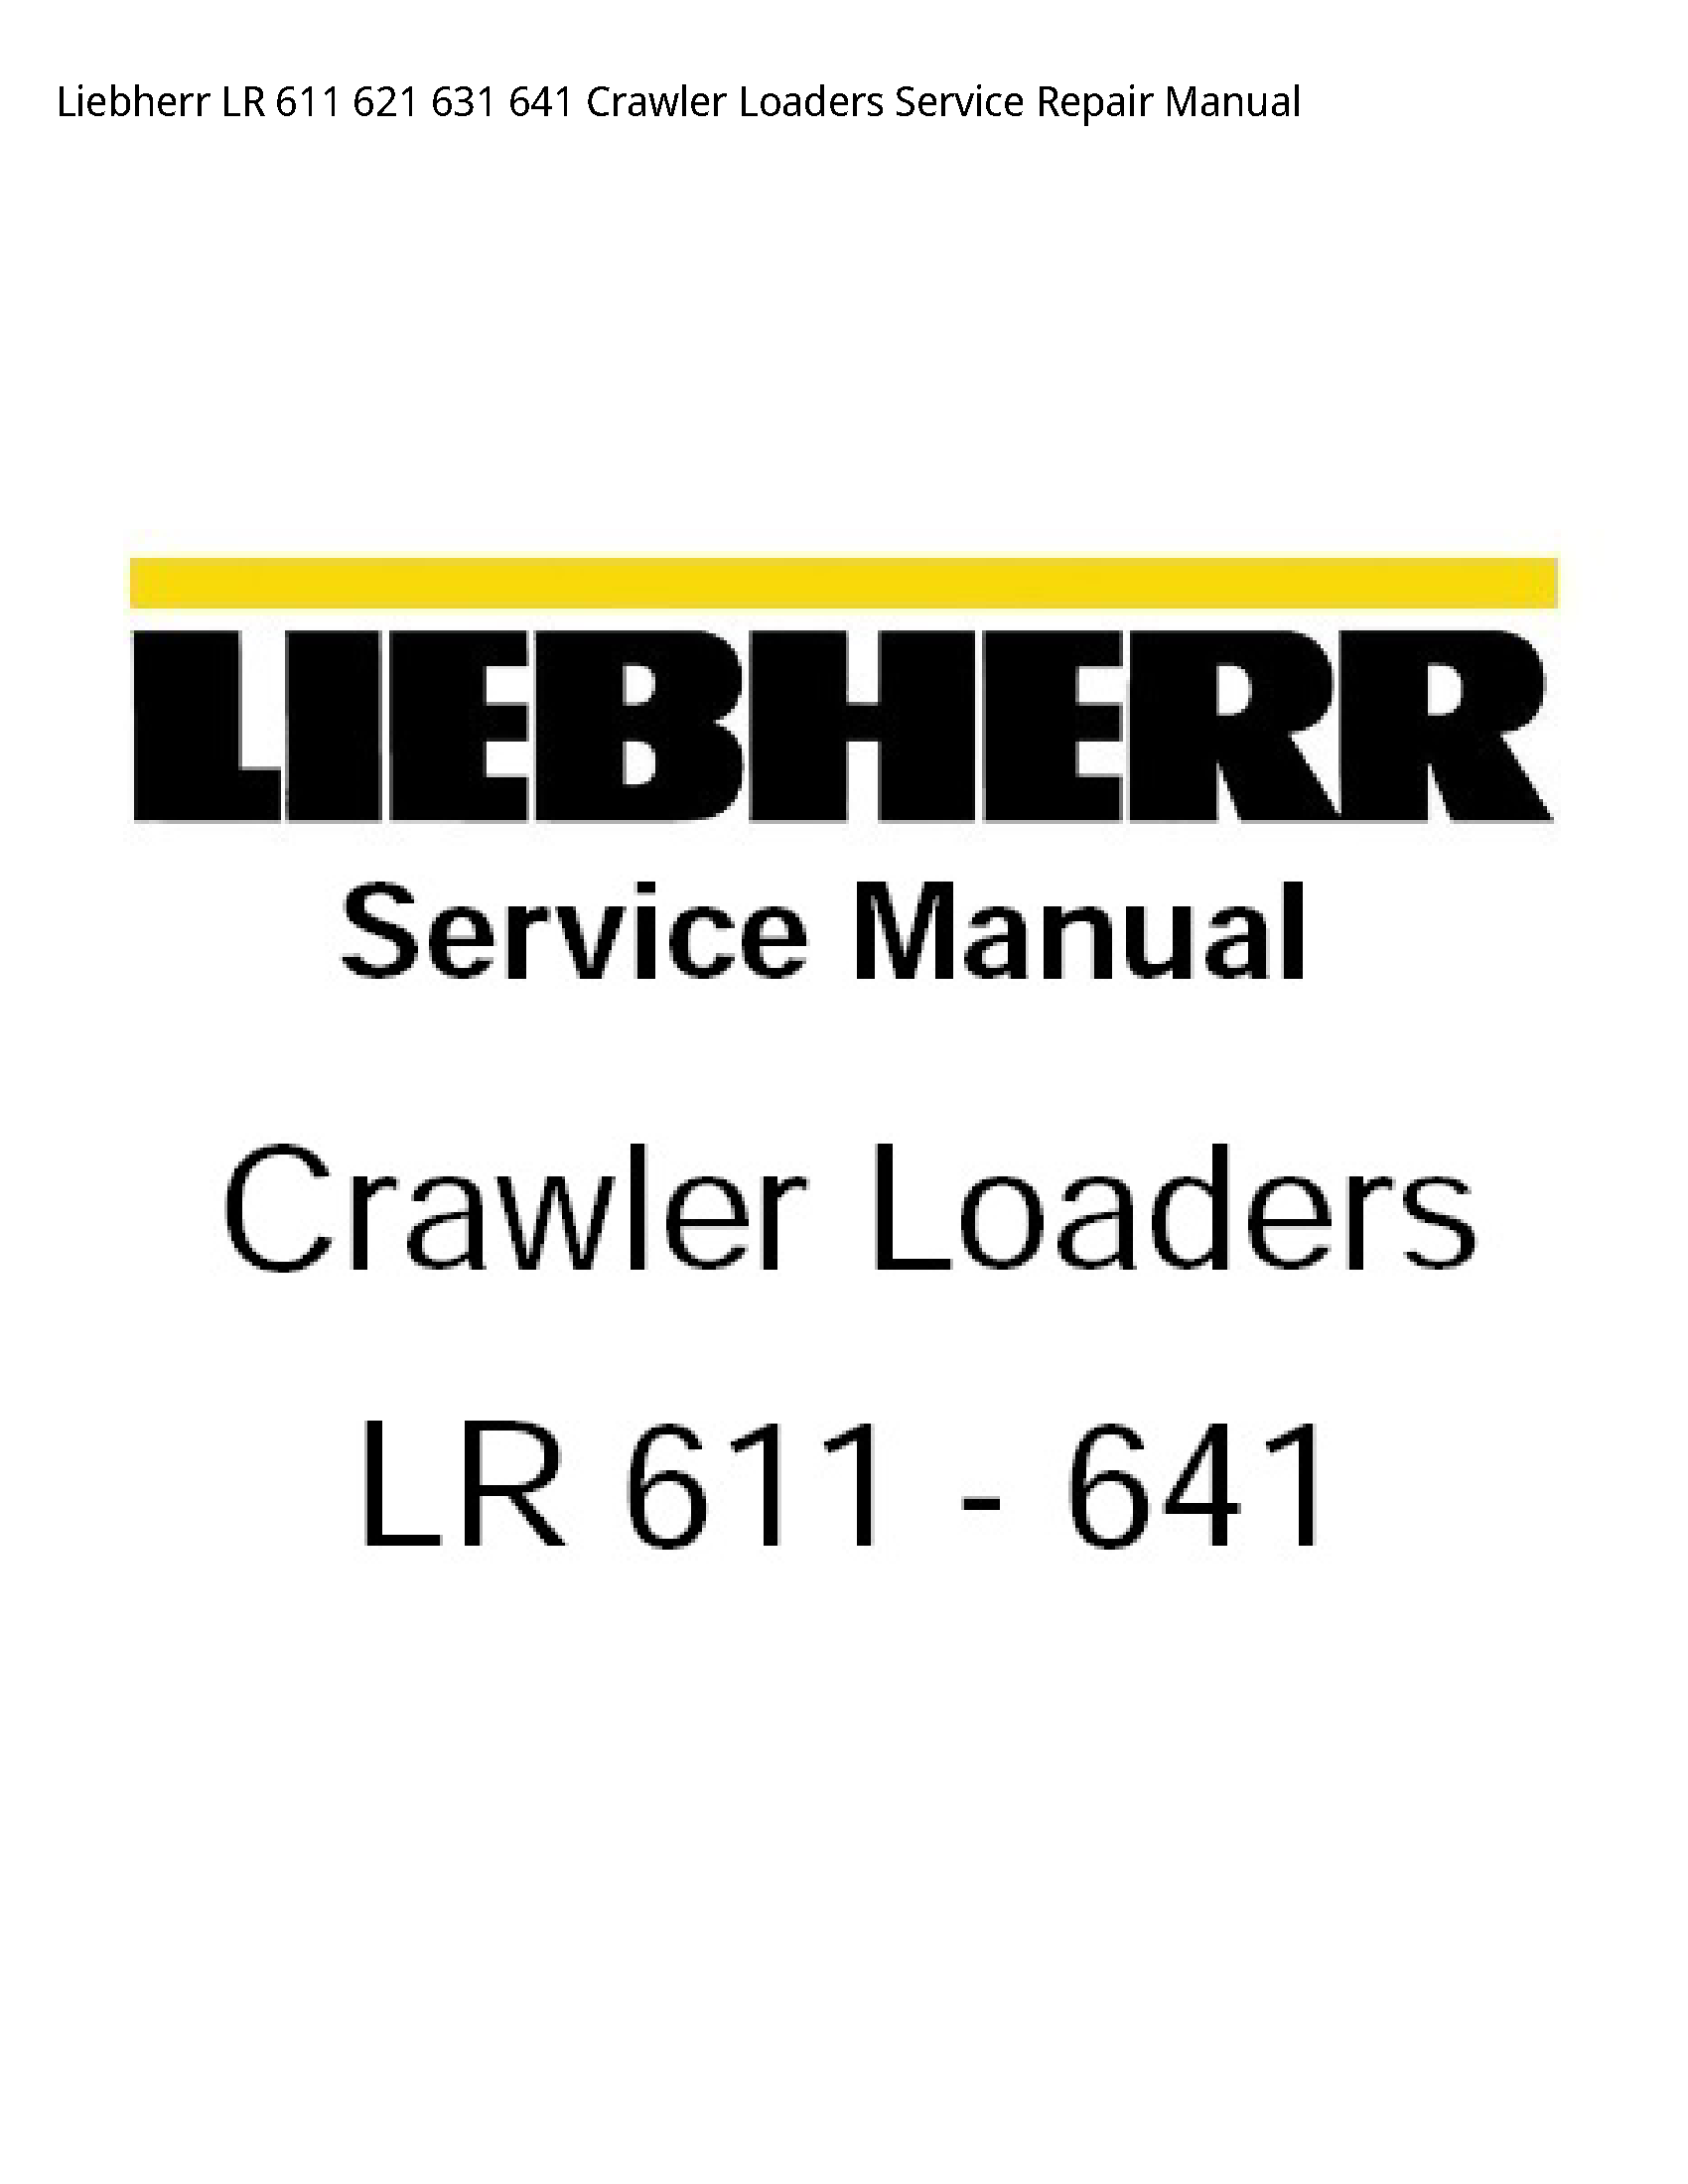 Liebherr 611 LR Crawler Loaders manual